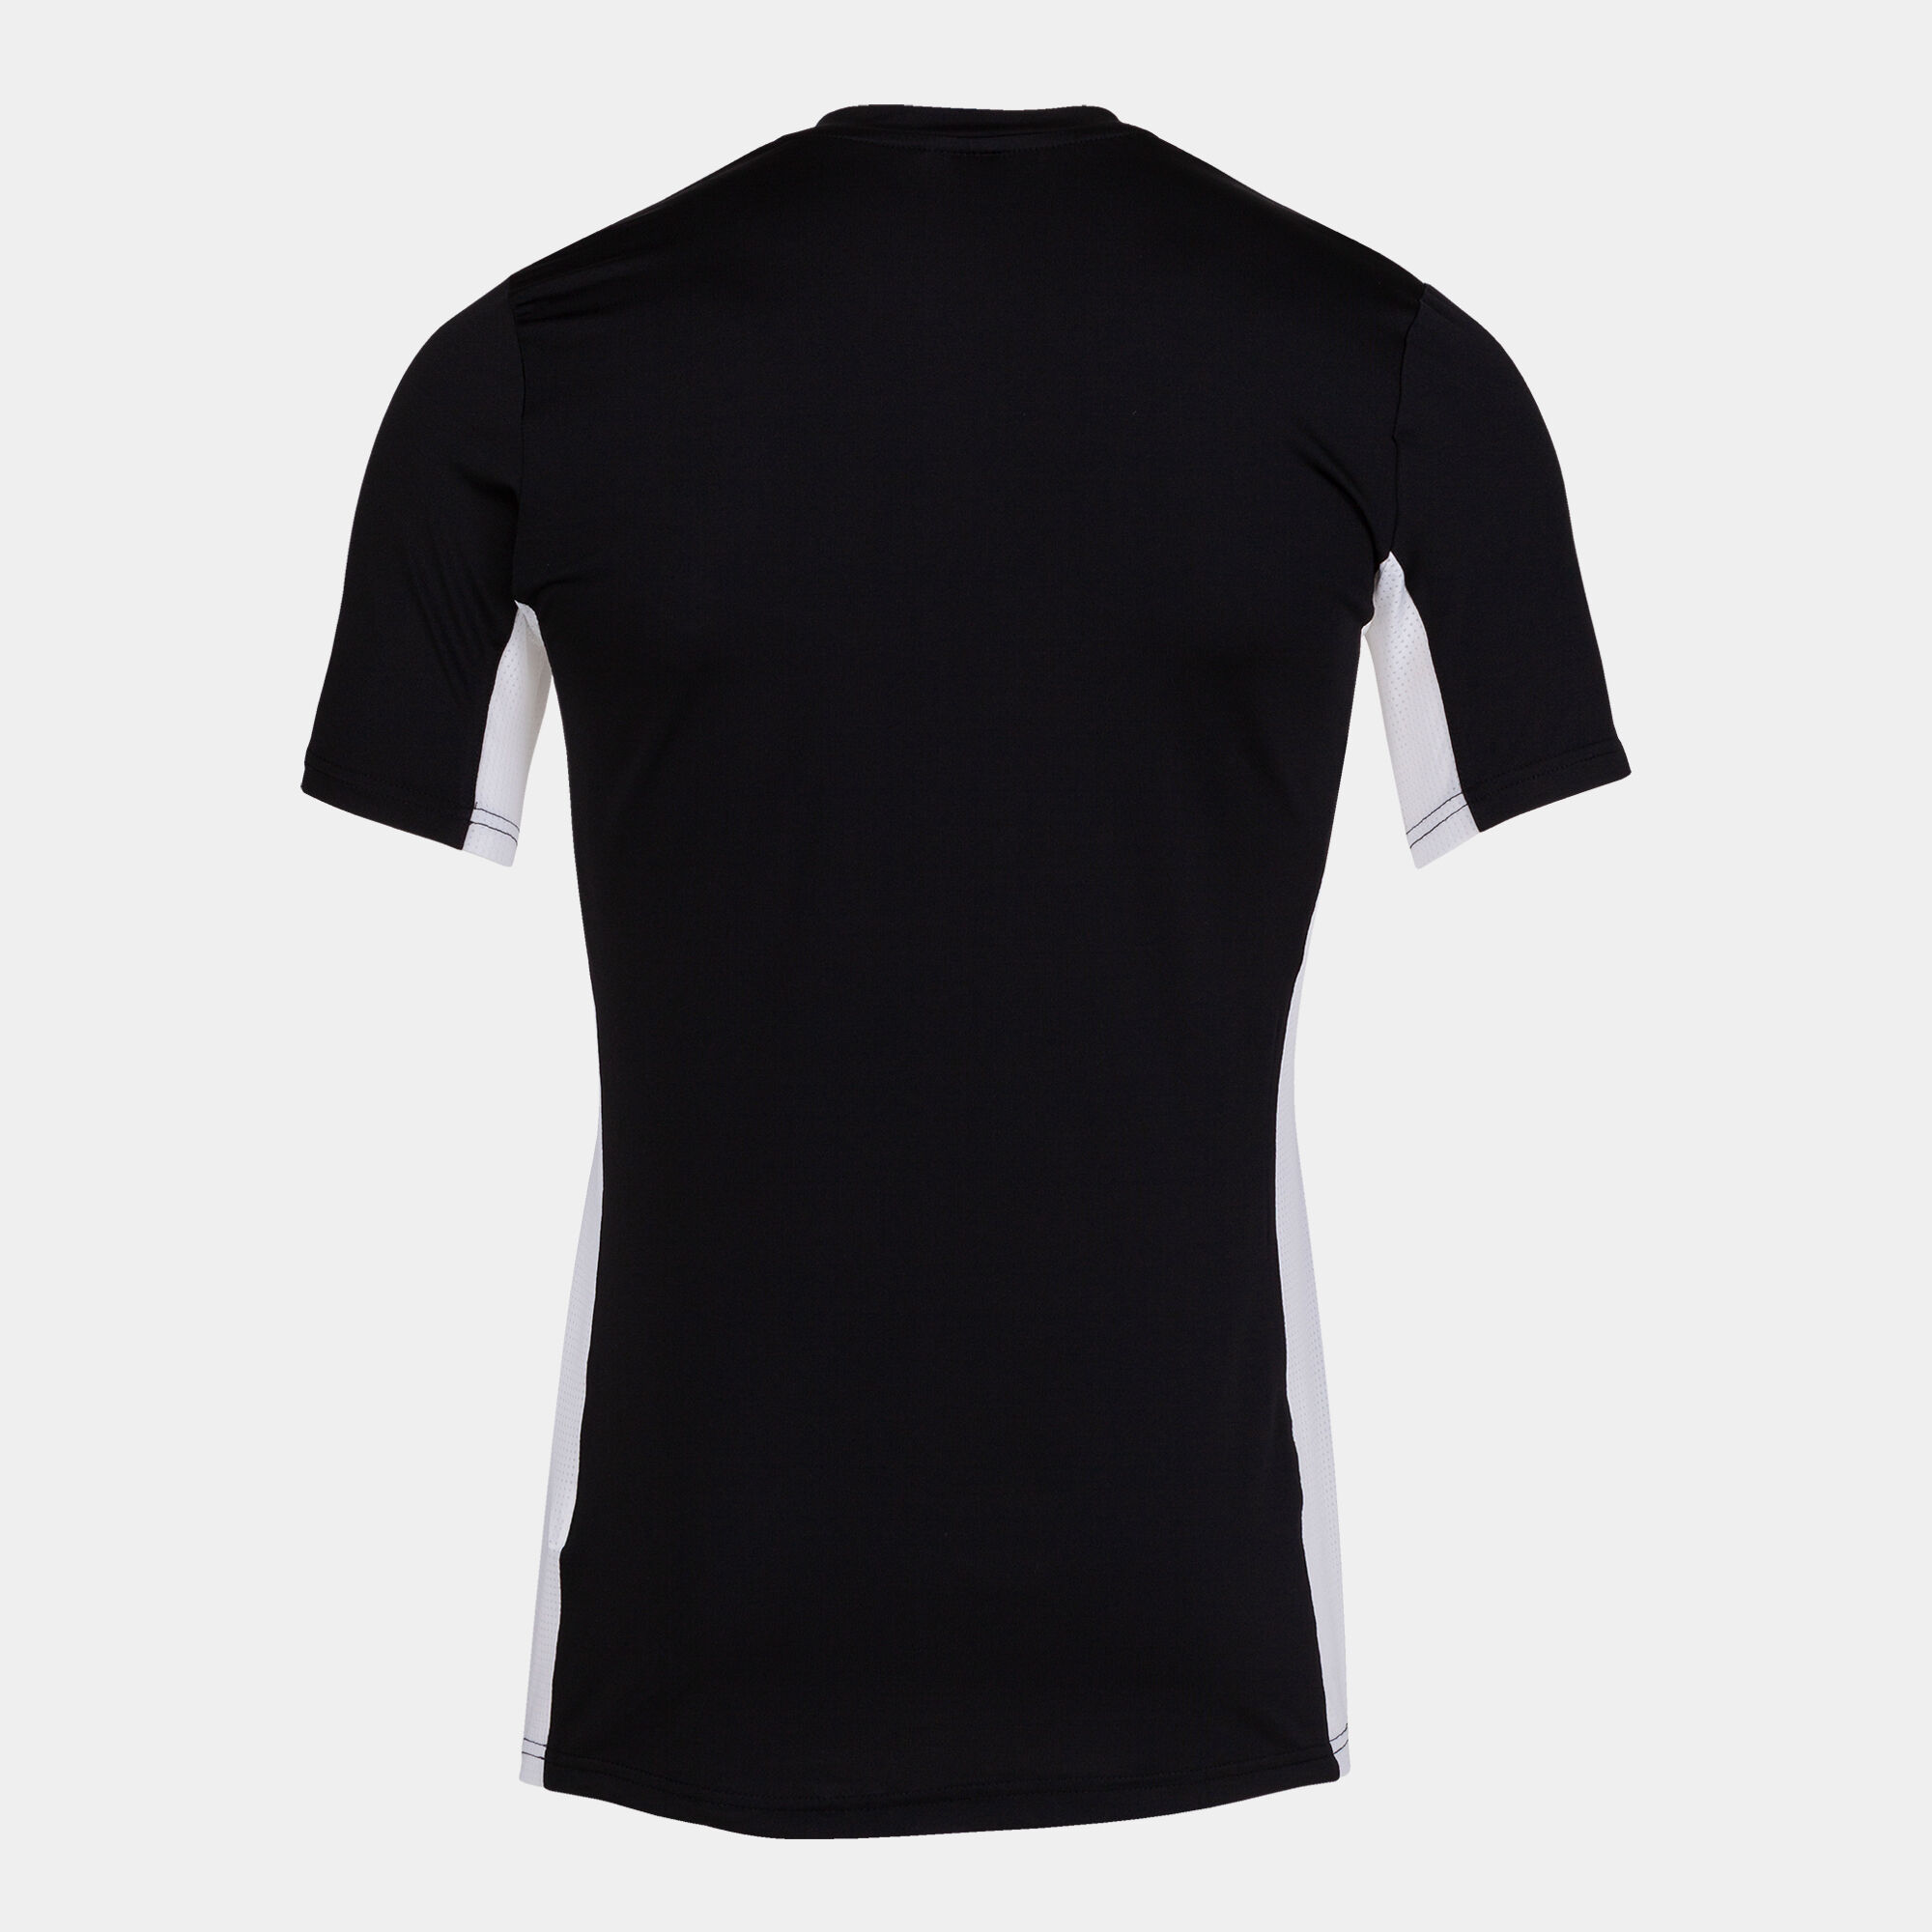 T-shirt manga curta homem Superliga preto branco